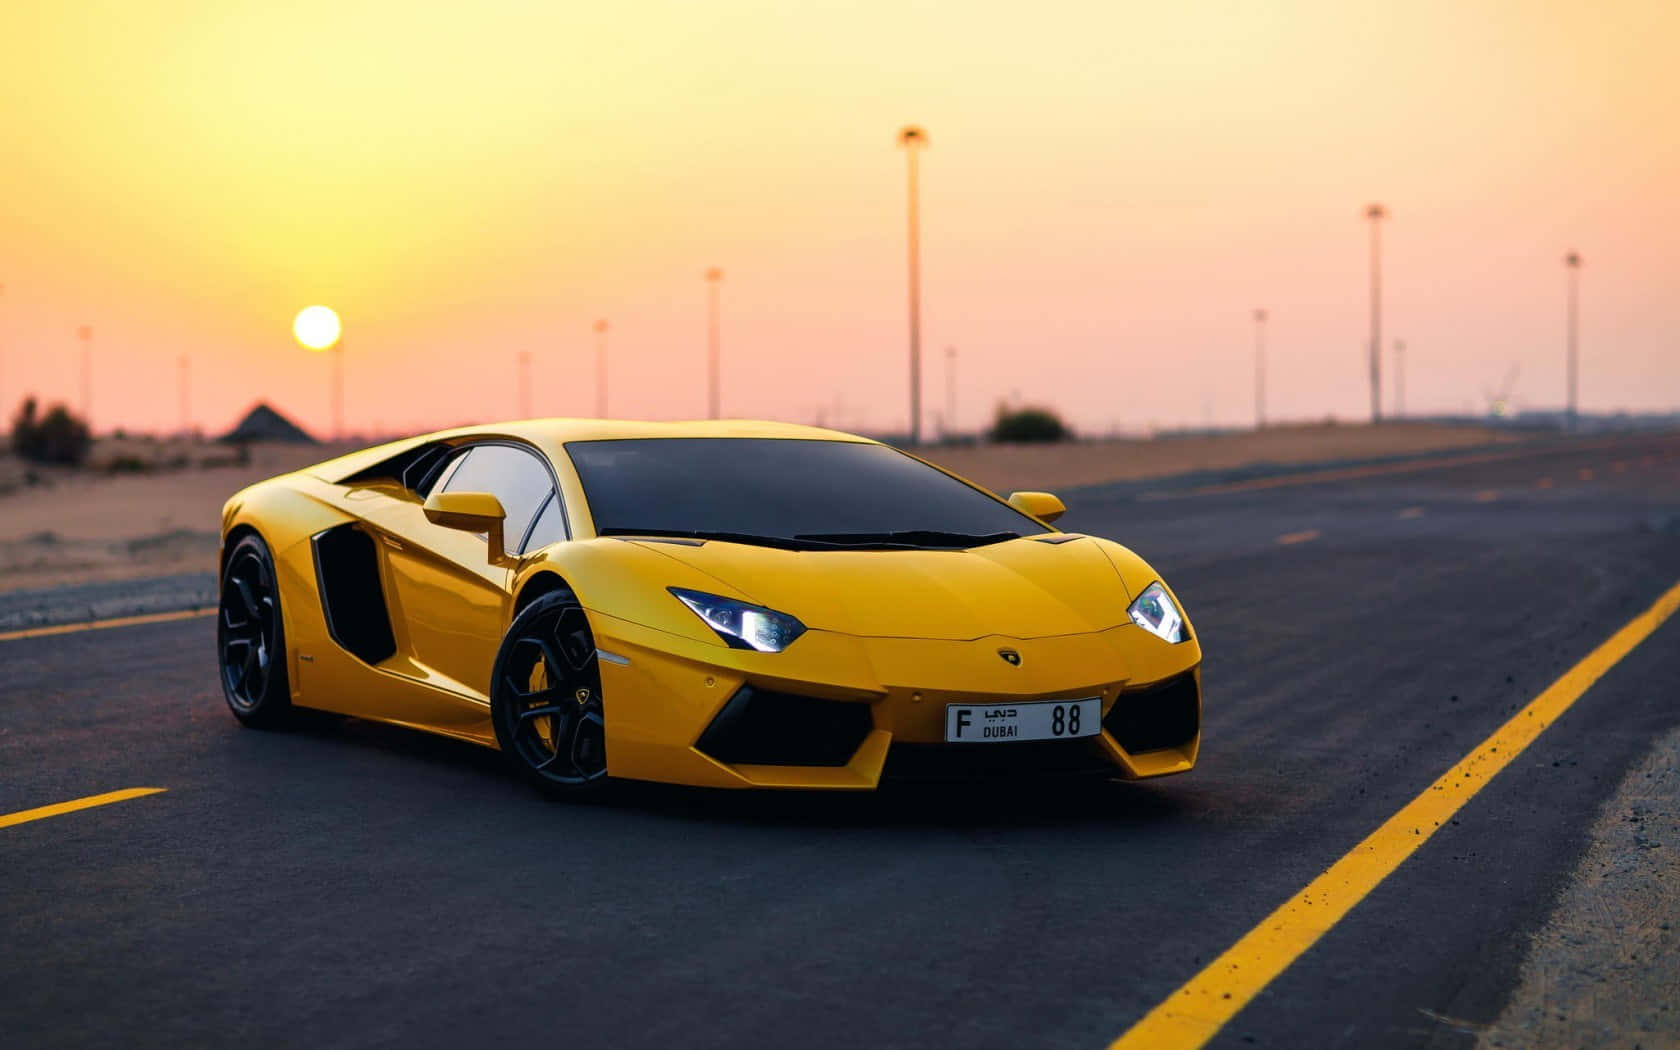 Experience the power of Lamborghini's performance